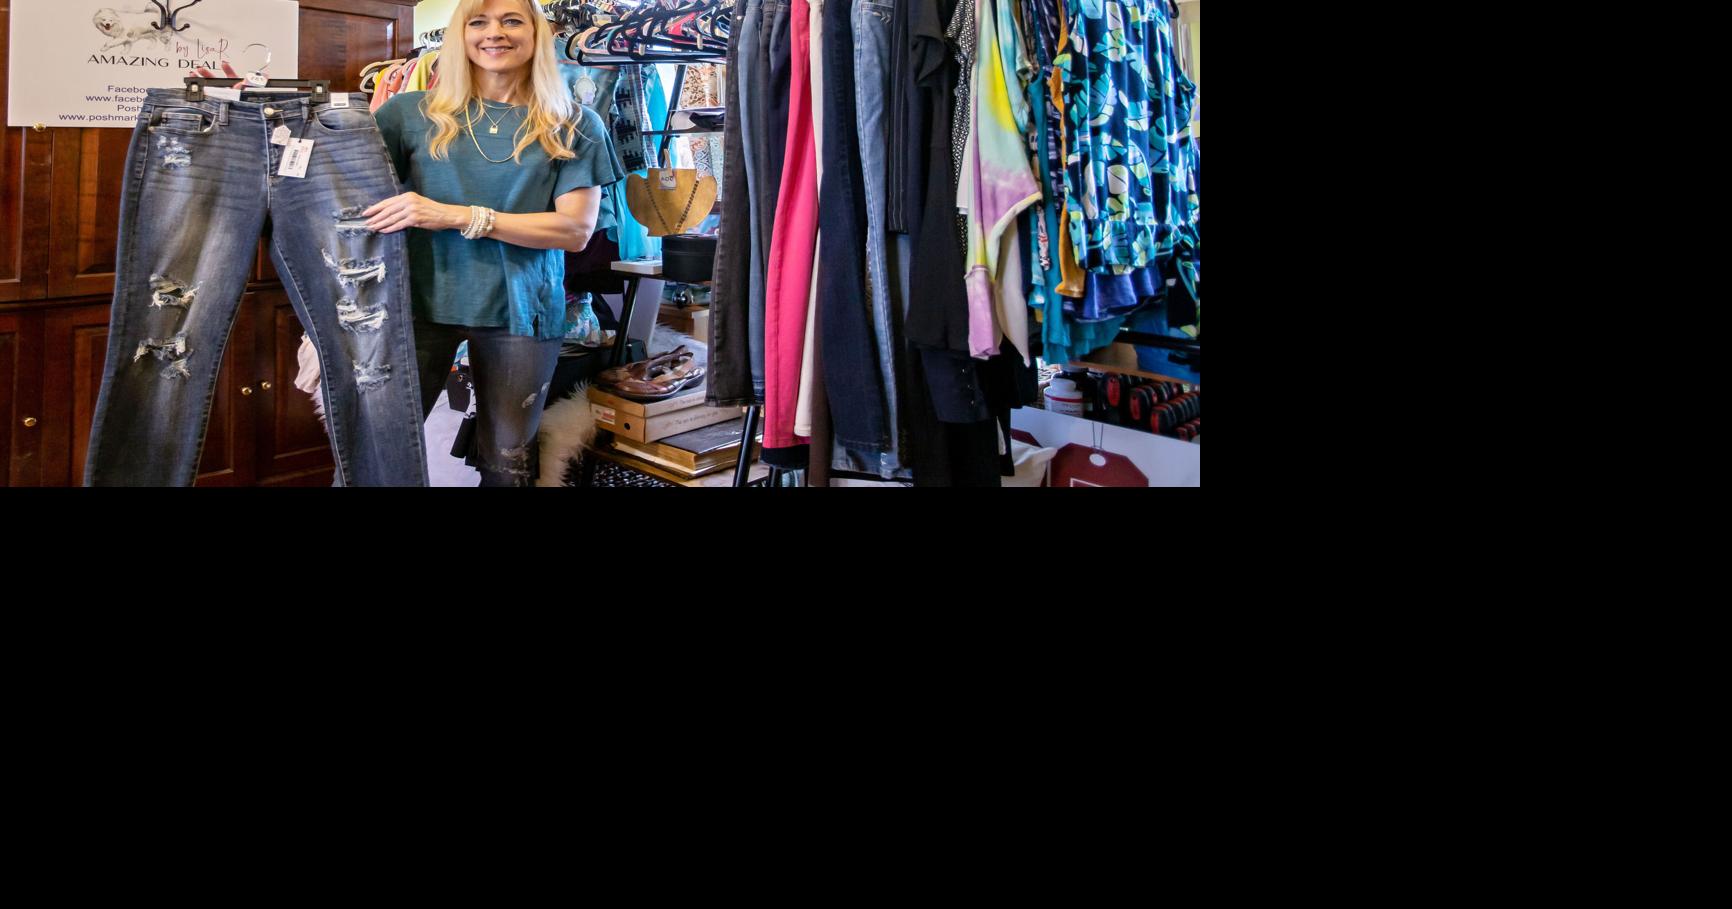 Way more fun than a yard sale': Woman turns live clothing sale